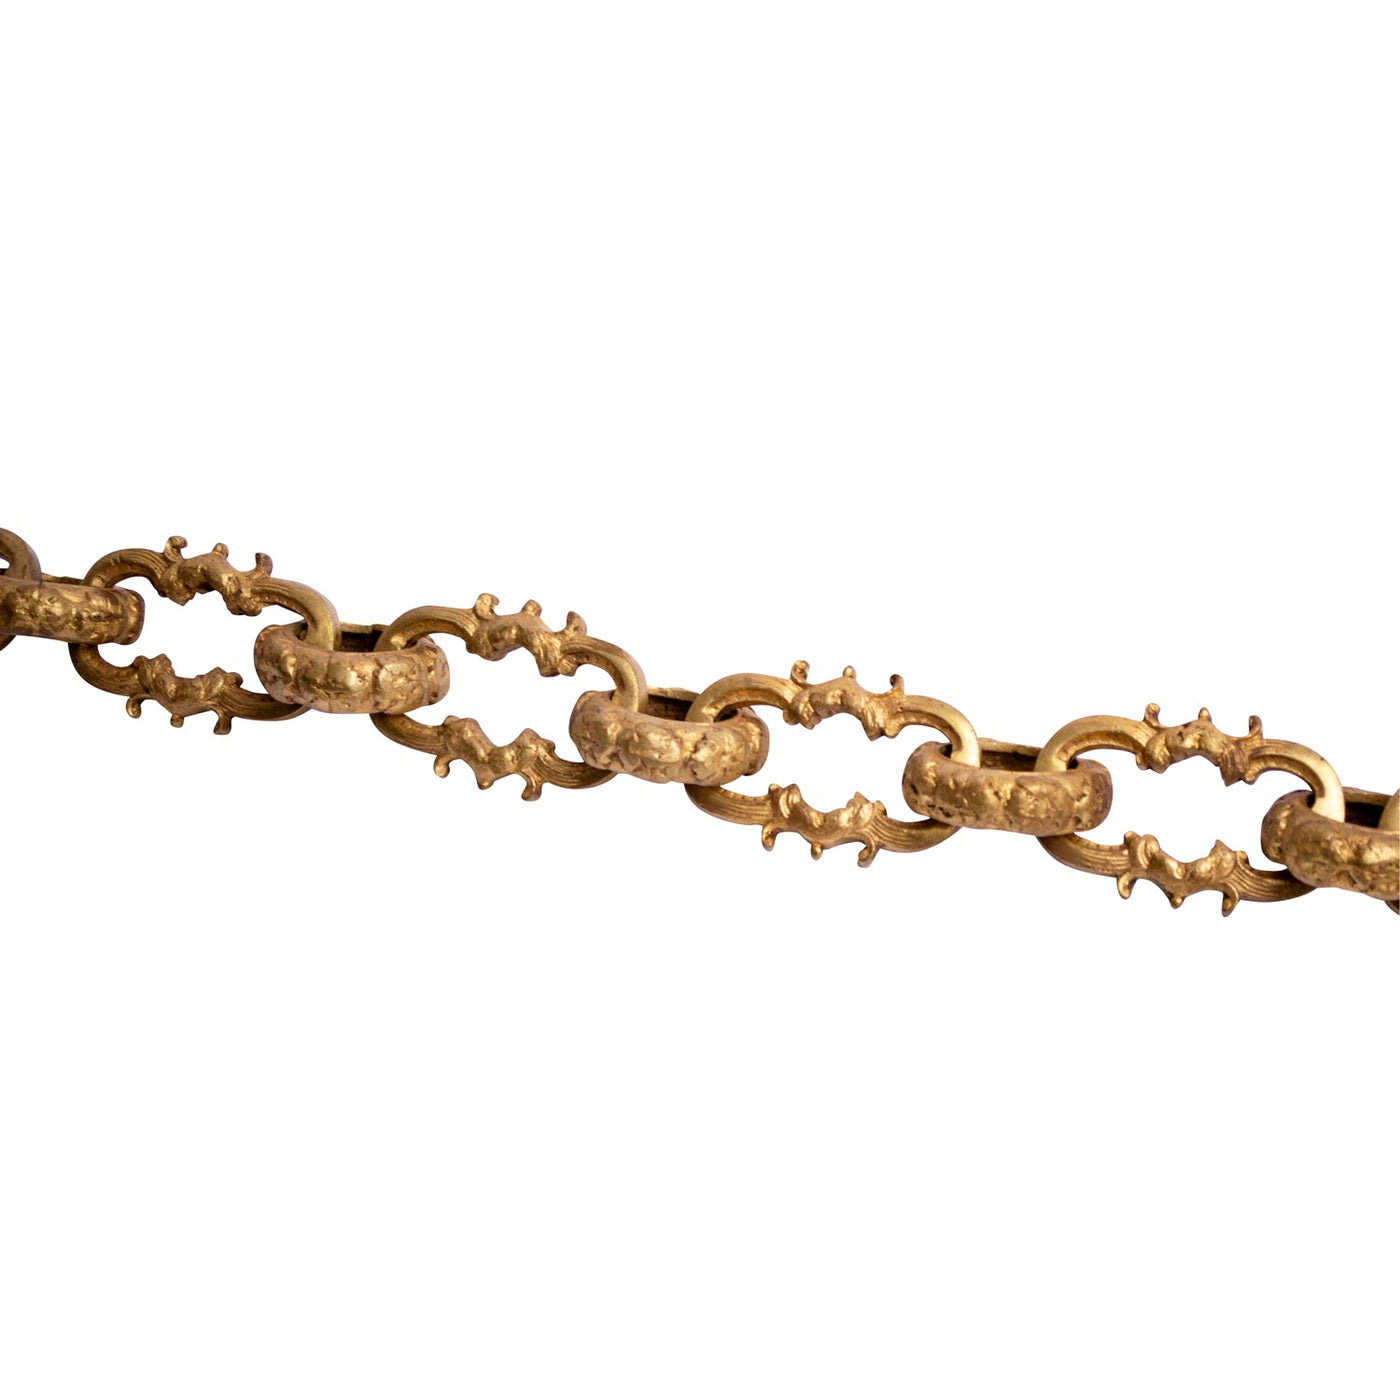 5 Feet Solid Brass Ornate Chain